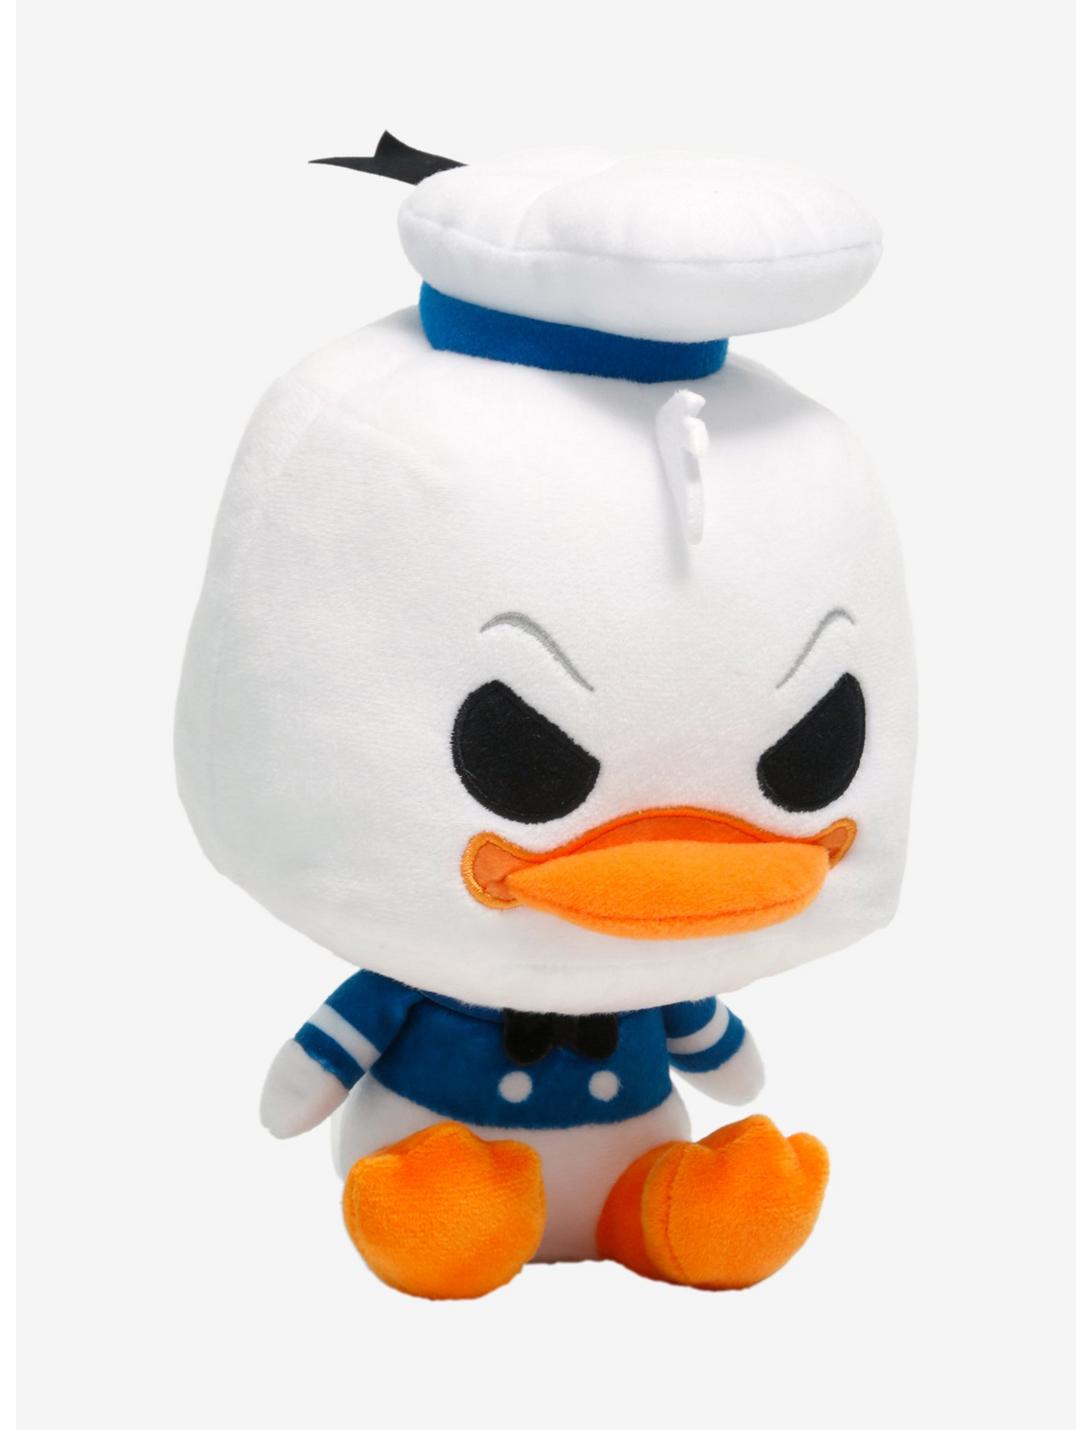 Funko Disney Angry Donald Duck Plush, , hi-res